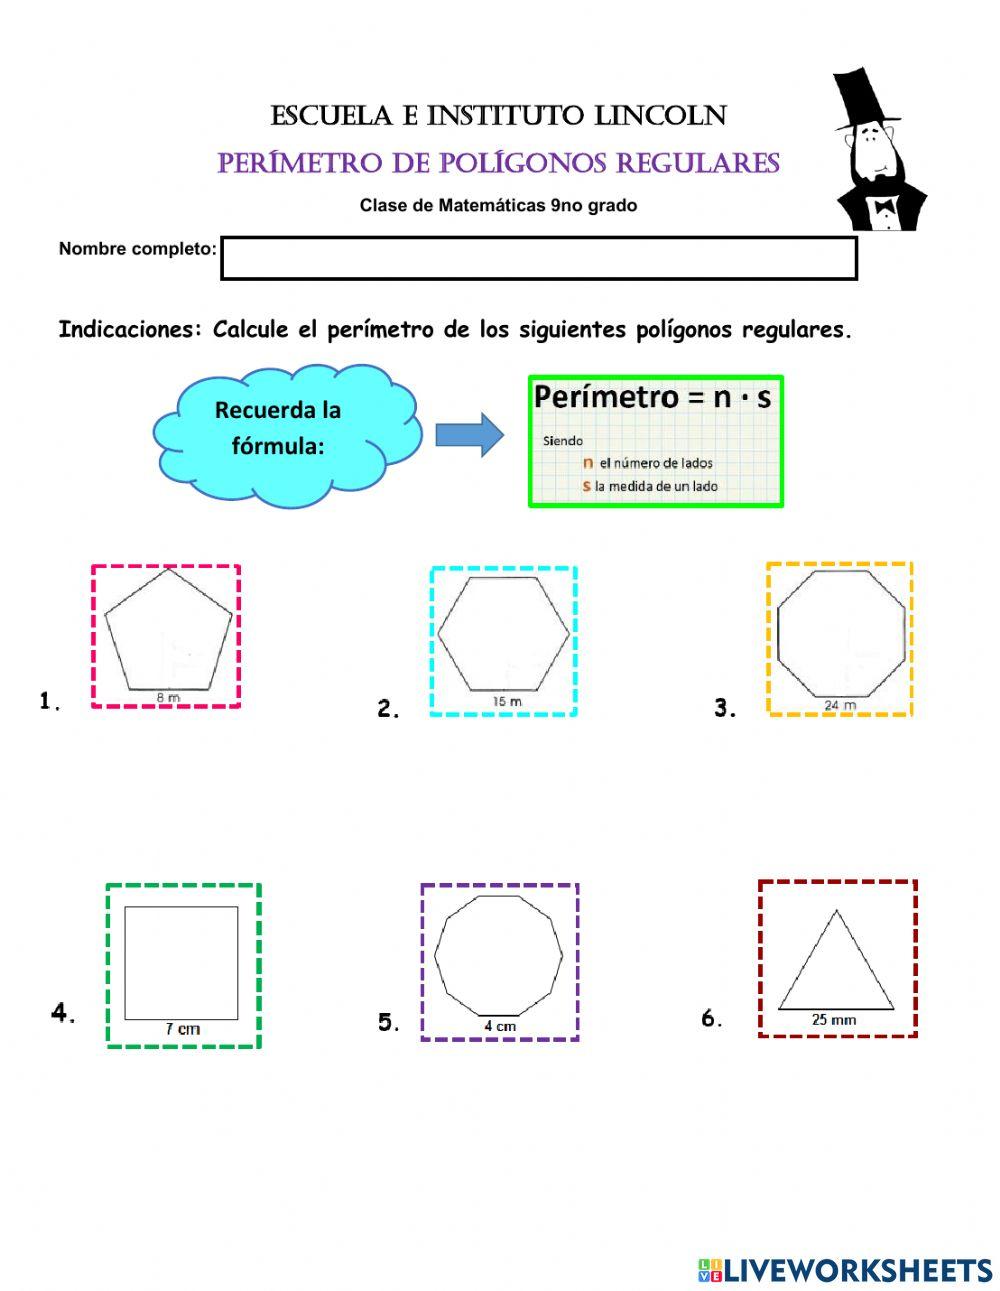 Perímetro de polígonos regulares